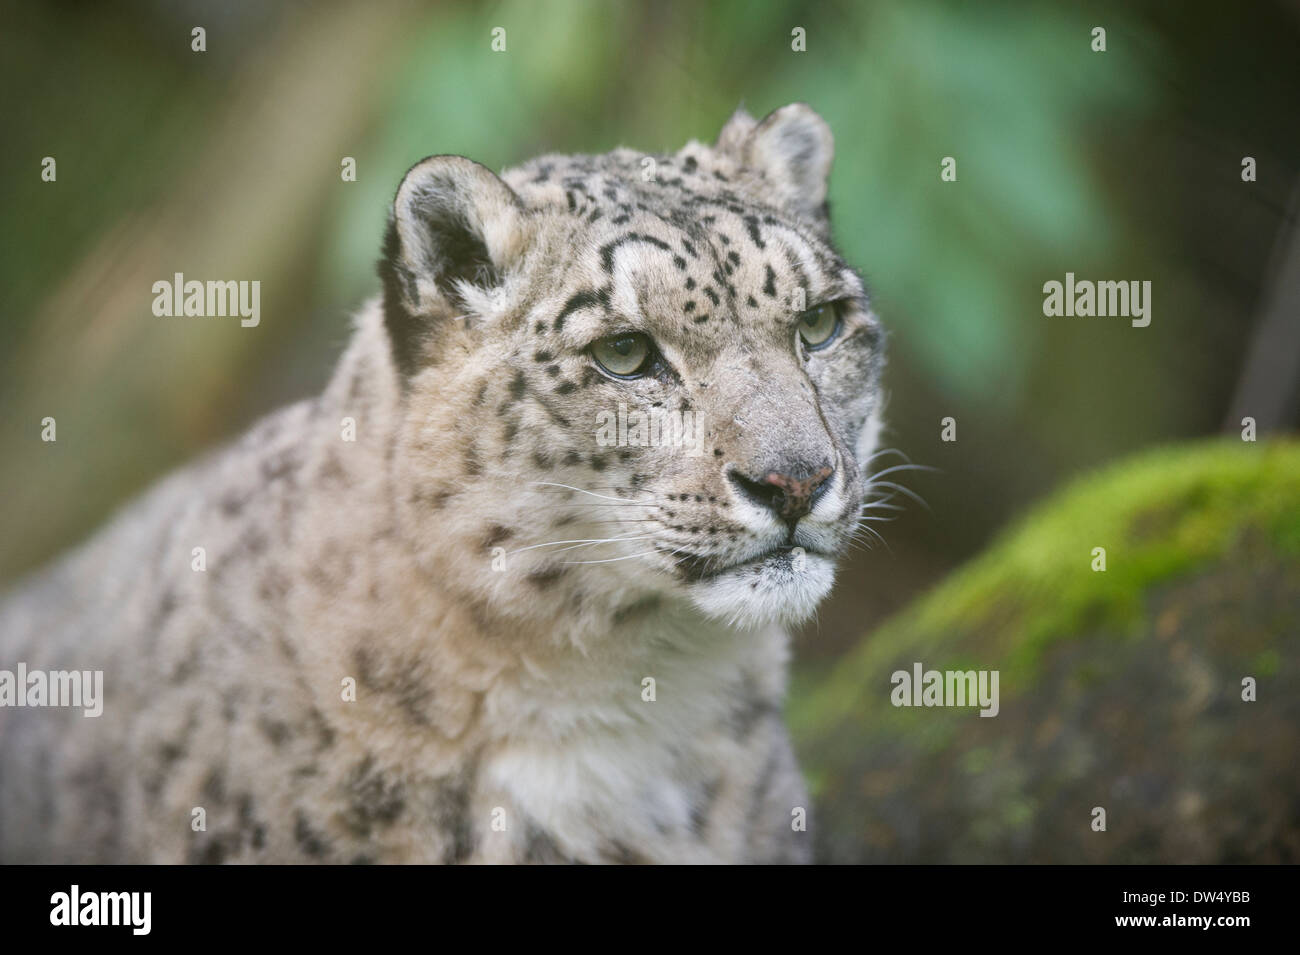 Snow Leopard (Panthera uncia or Uncia uncia) Stock Photo